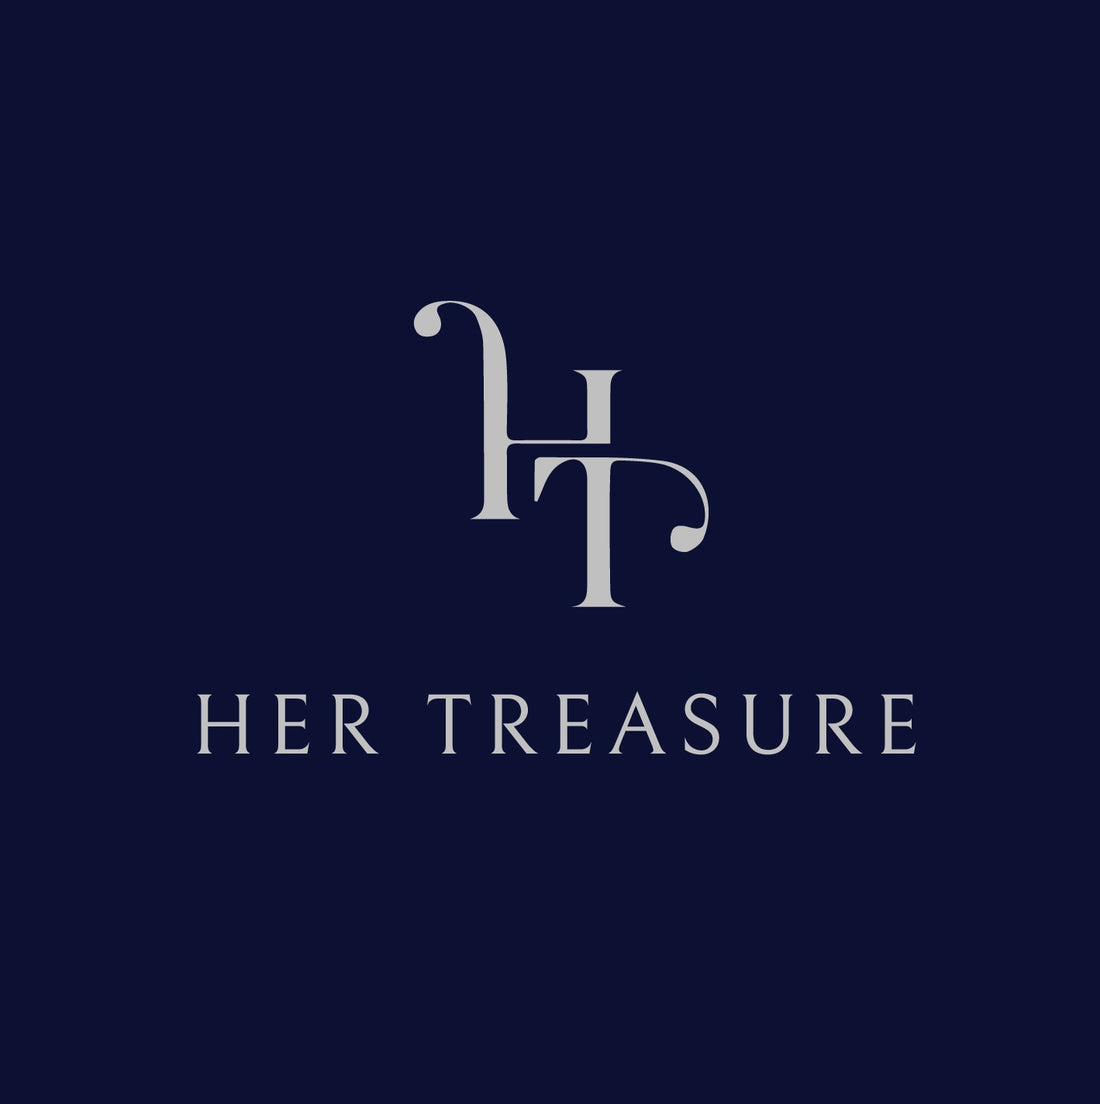 Her Treasure